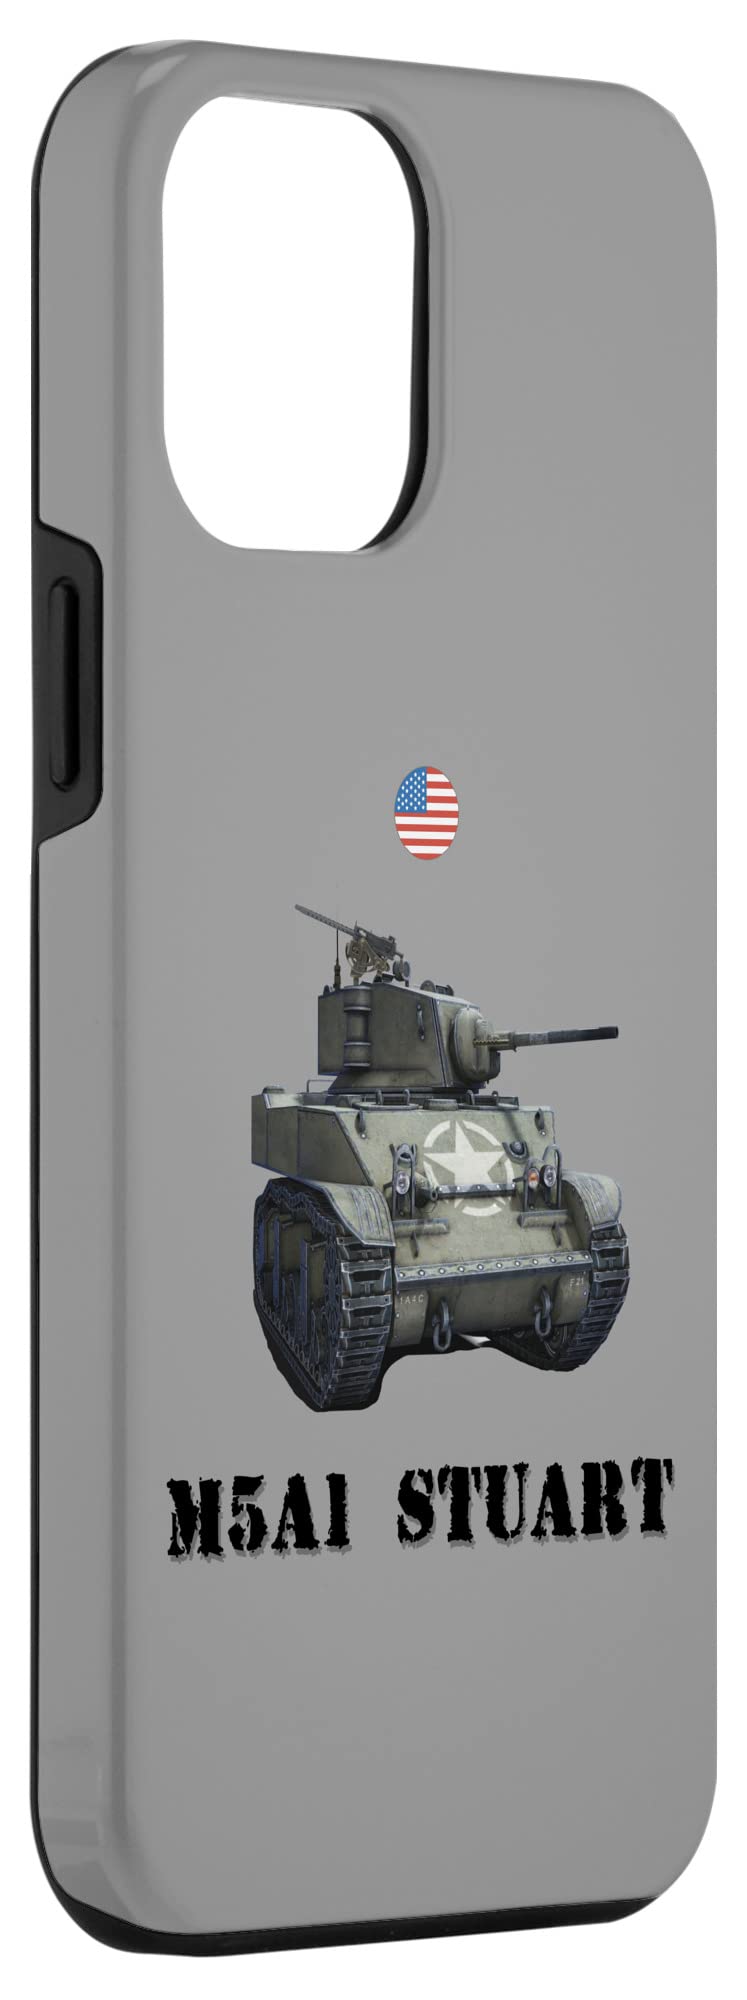 iPhone 12 Pro Max M5A1 Stuart, USA Light Tank WW2 Military Machinery Case